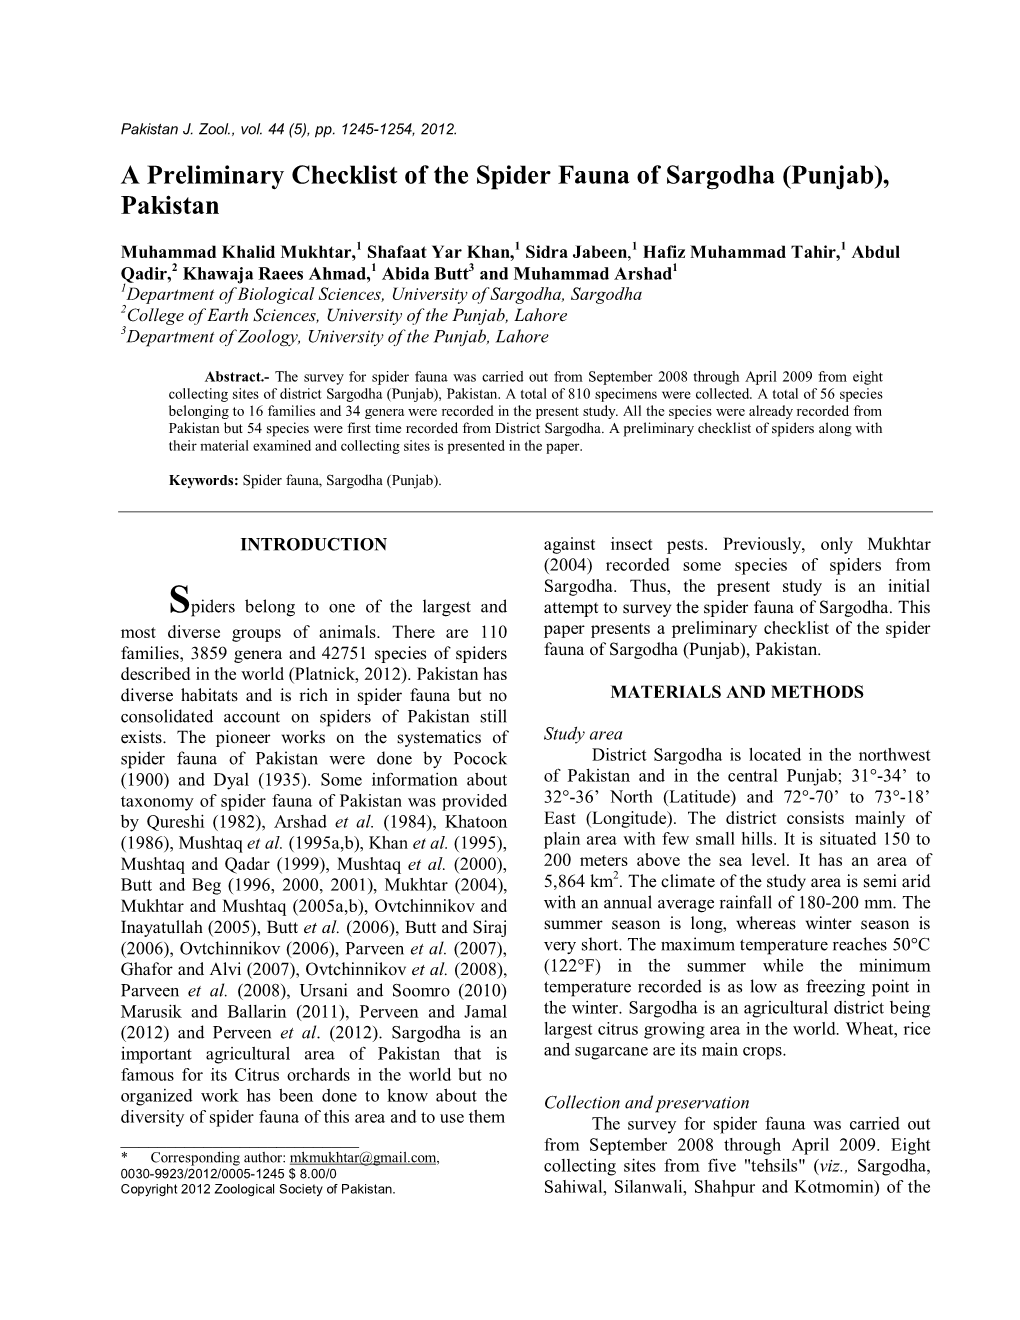 A Preliminary Checklist of the Spider Fauna of Sargodha (Punjab), Pakistan